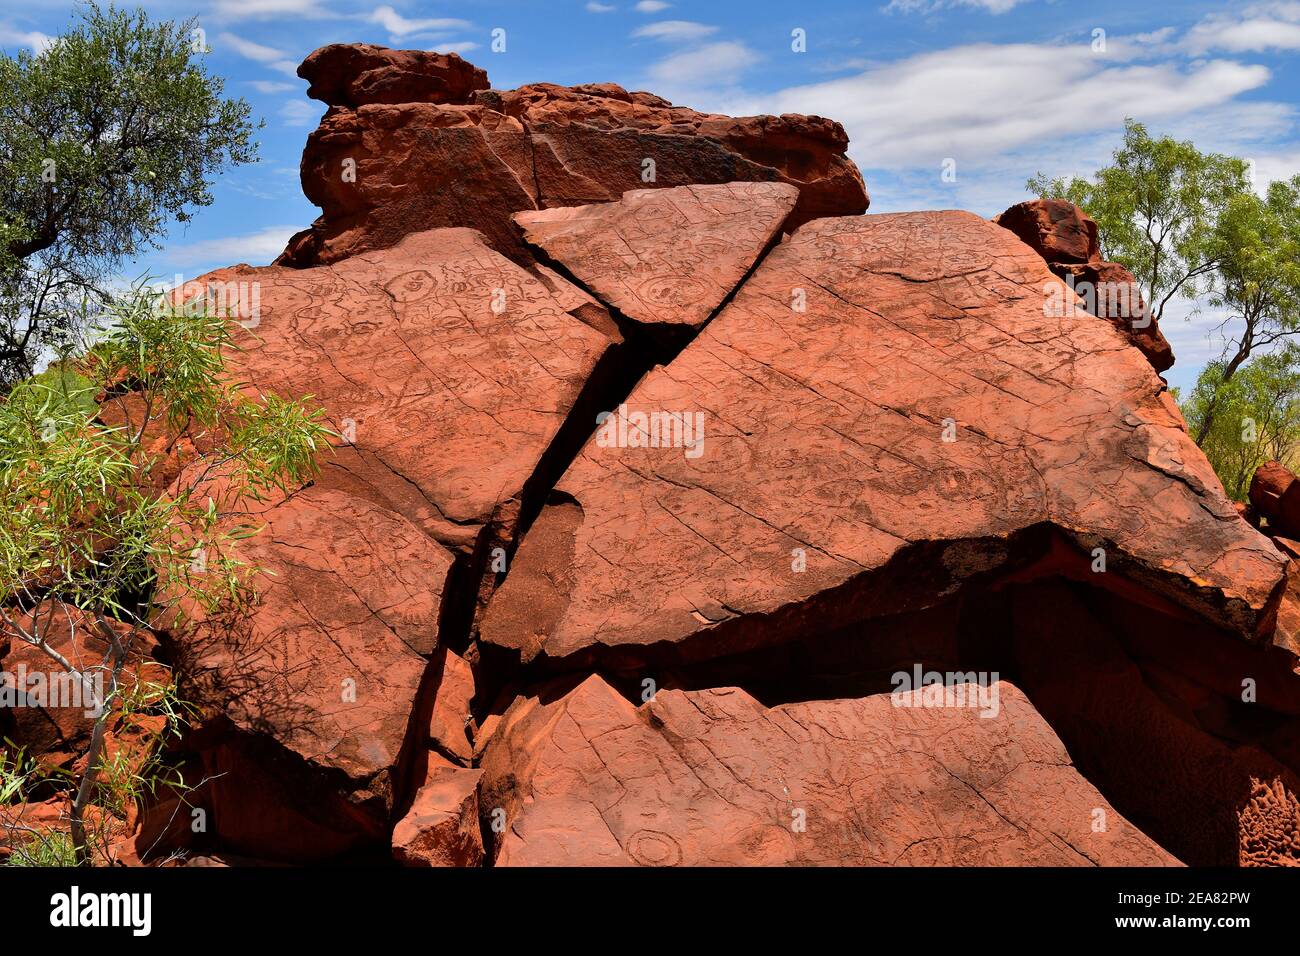 Australien, prähistorische Felssgraburen der Aborigenes in Ewaninga nahe Alice Springs in Nordastralien Australie, territoire du Nord, public Ewaninga conservation R Banque D'Images